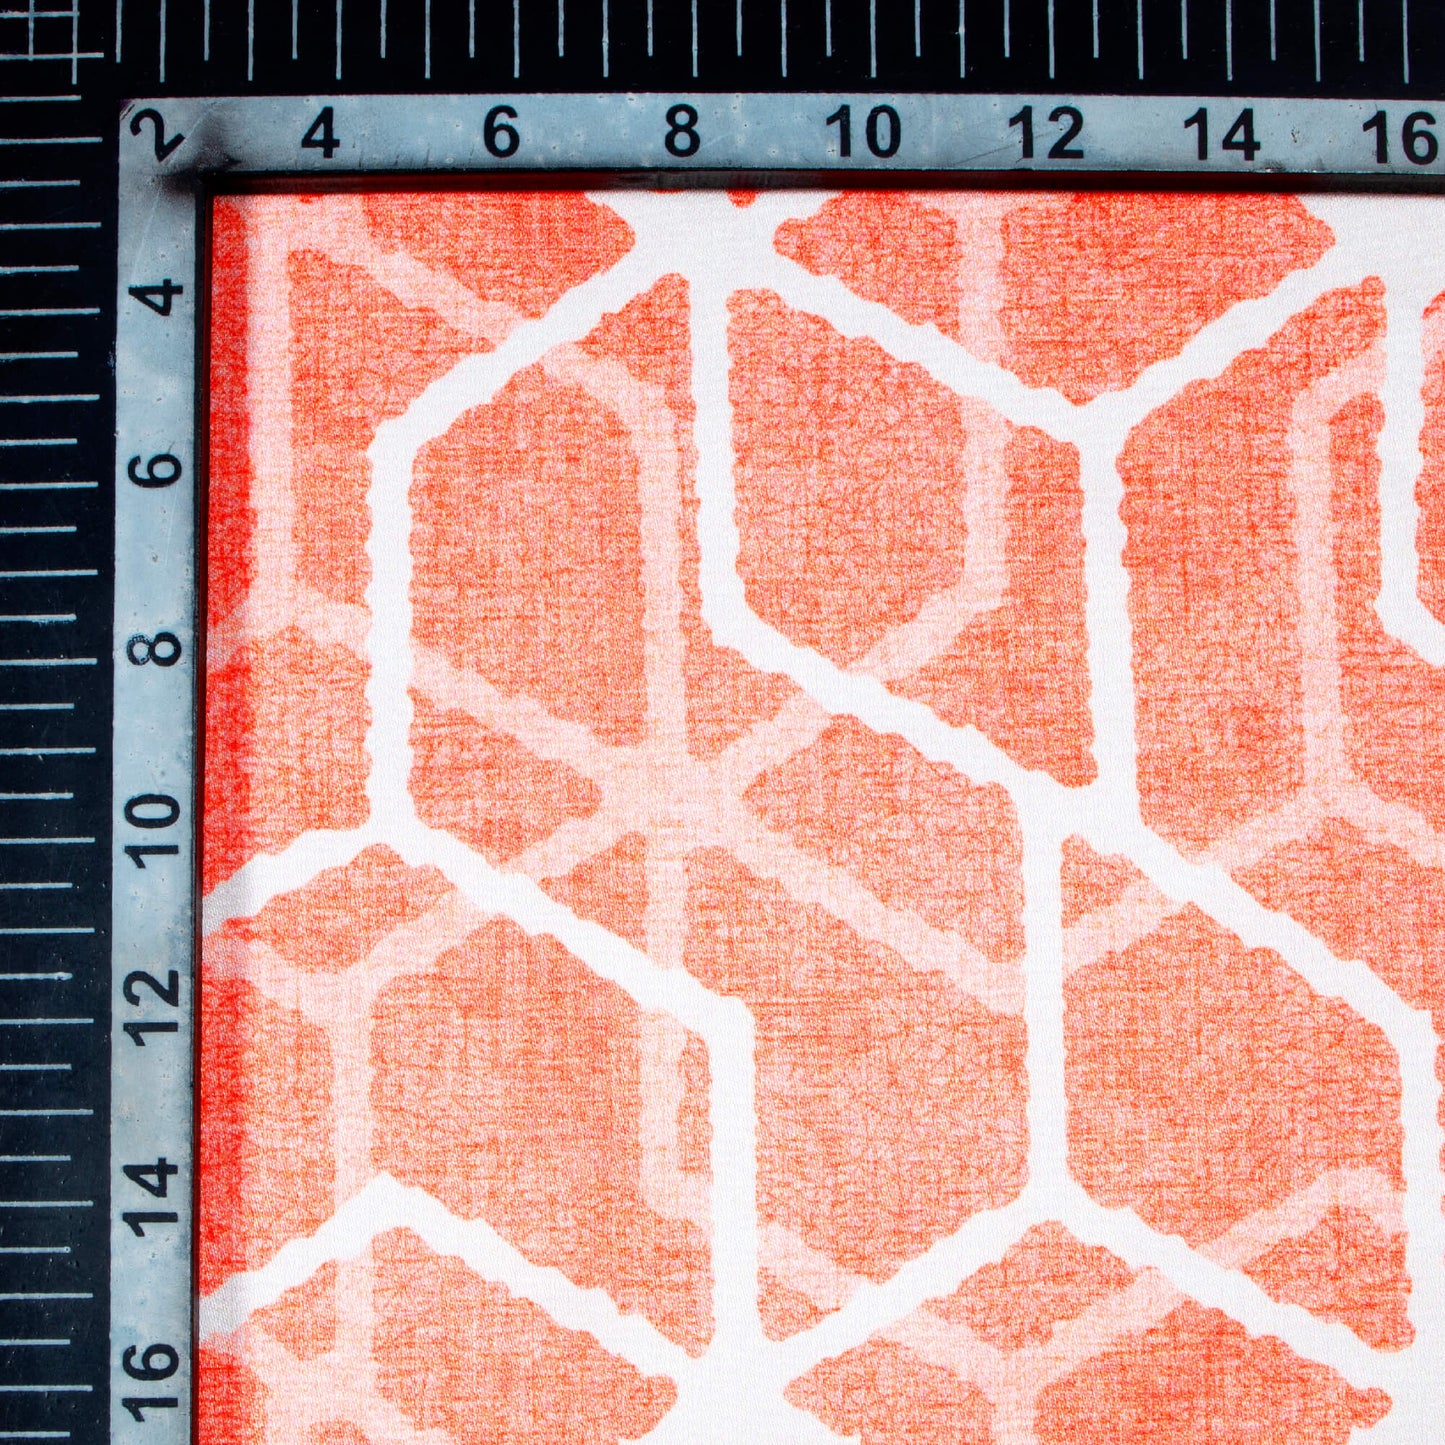 Coral Peach And White Geometric Pattern Digital Print Japan Satin Fabric